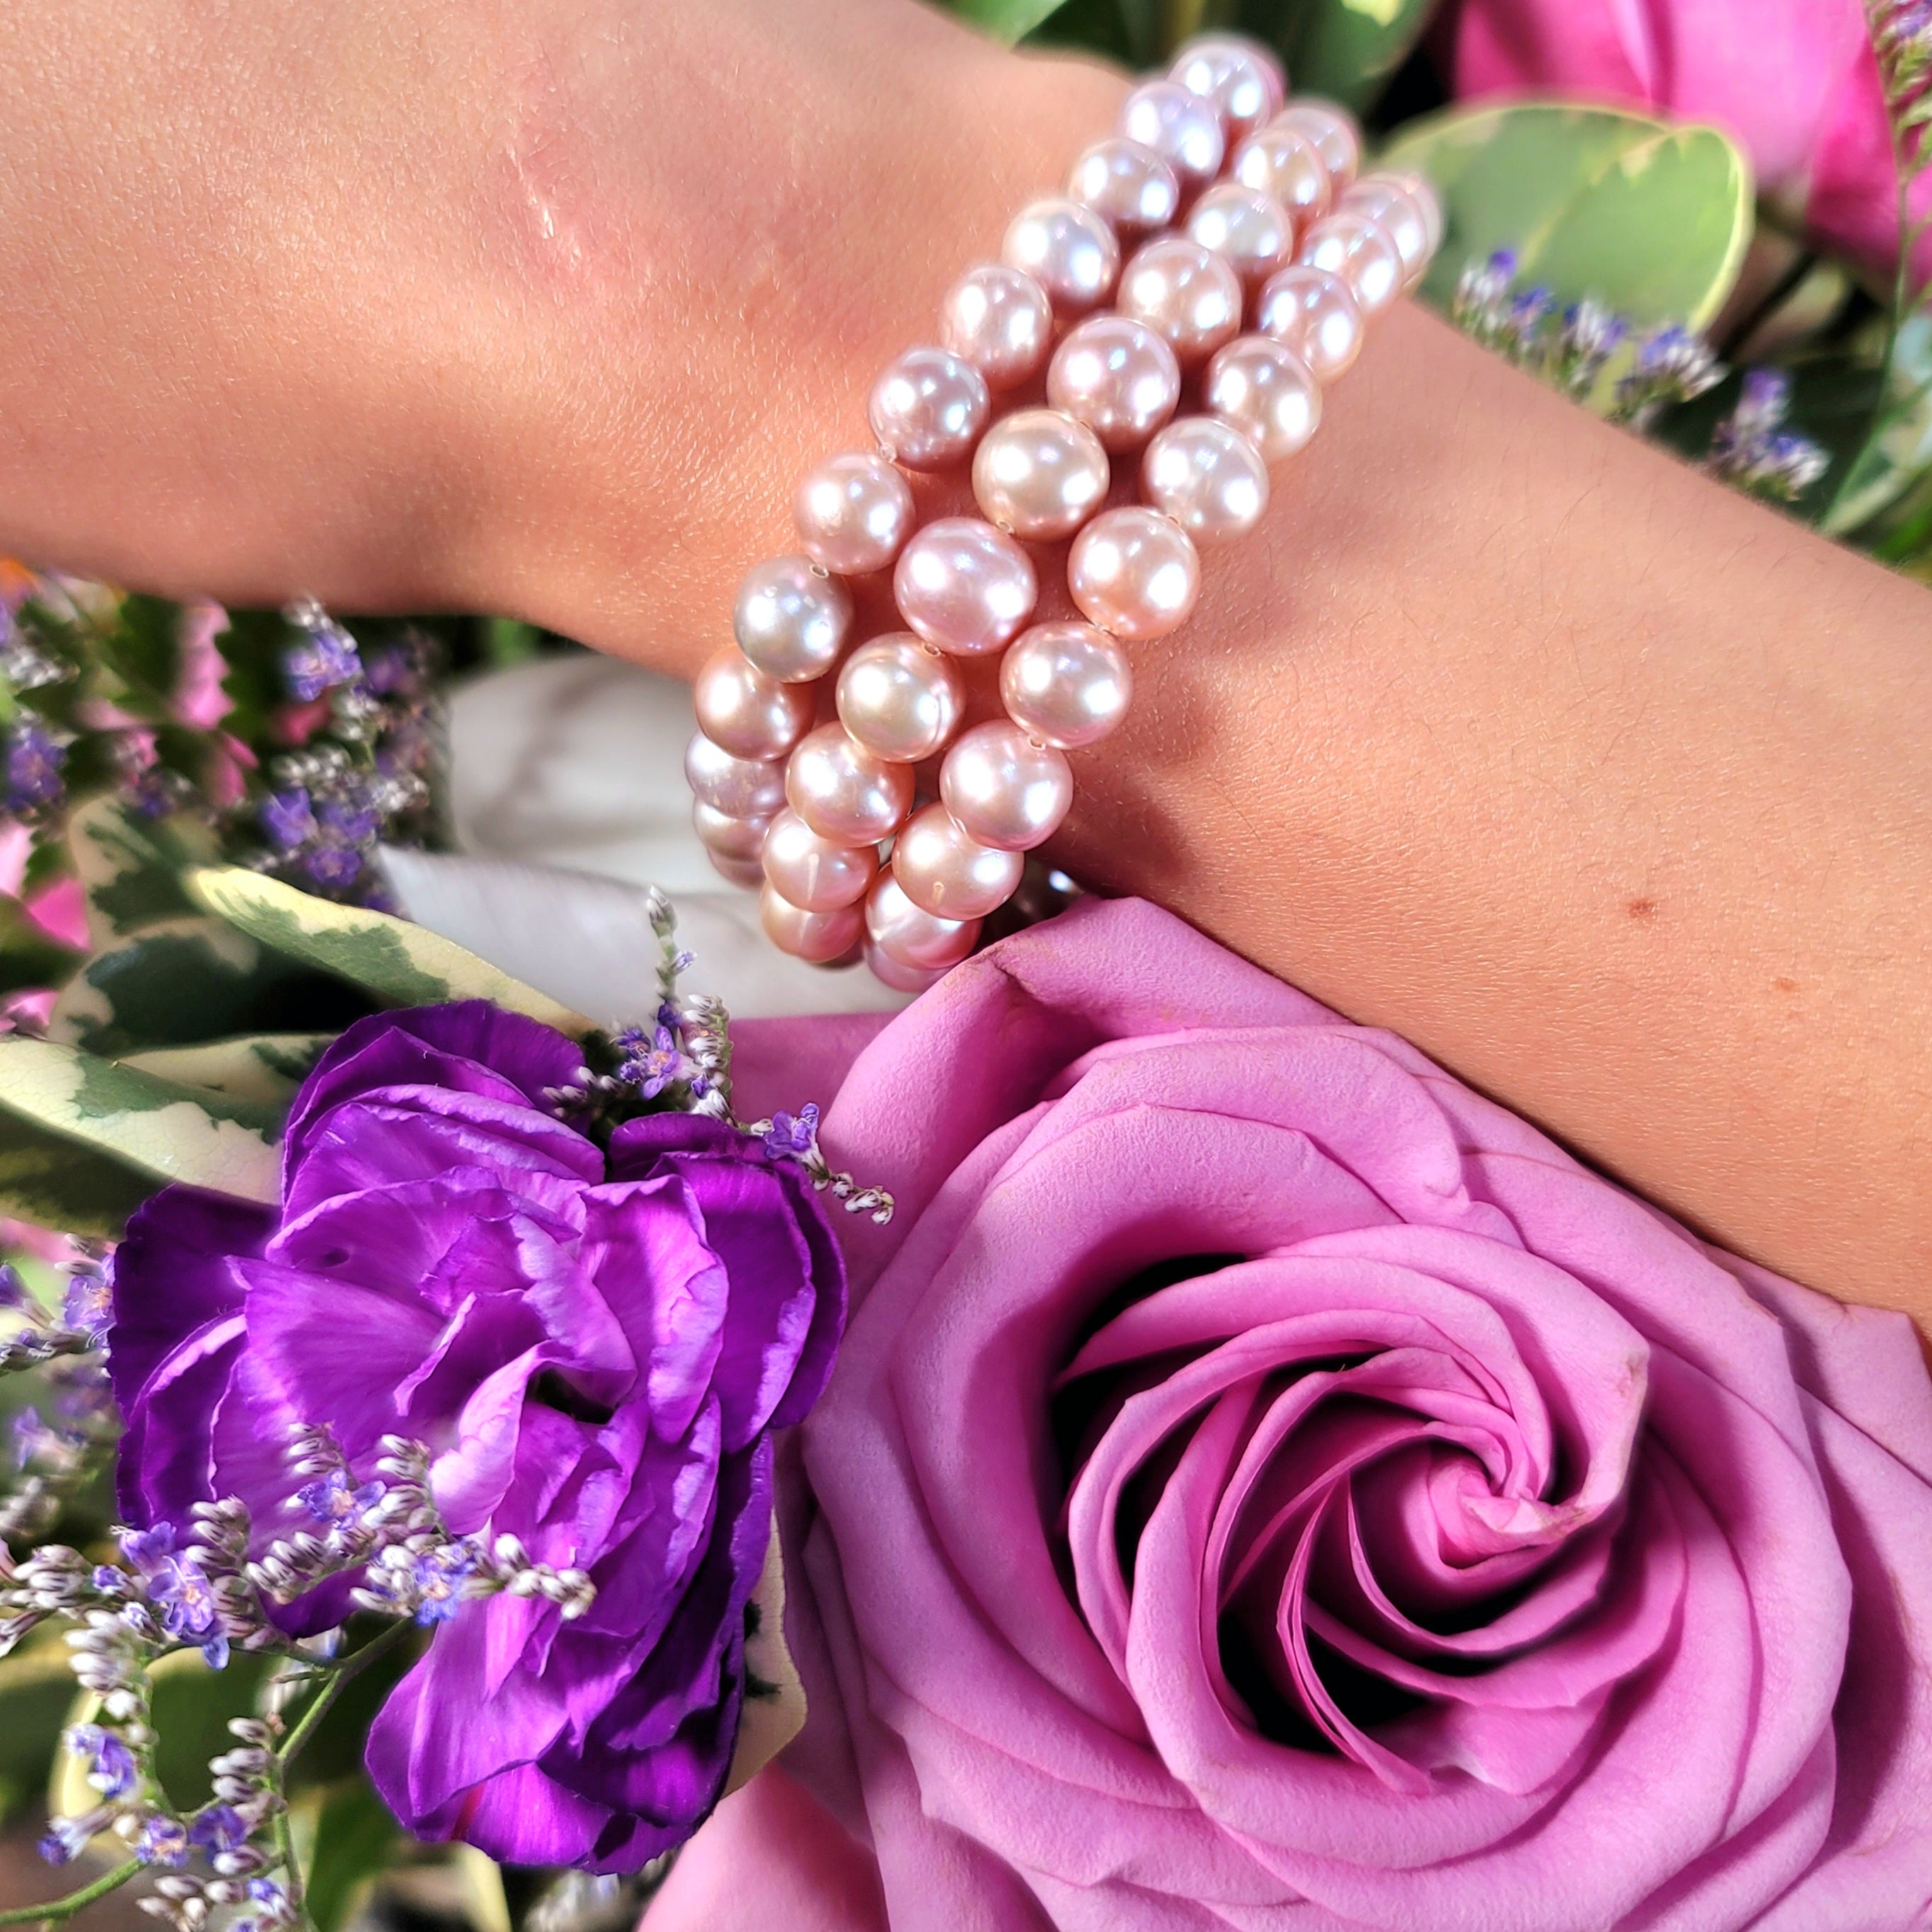 Lavender Pearl Bracelet for Abundance, Honesty and Wisdom